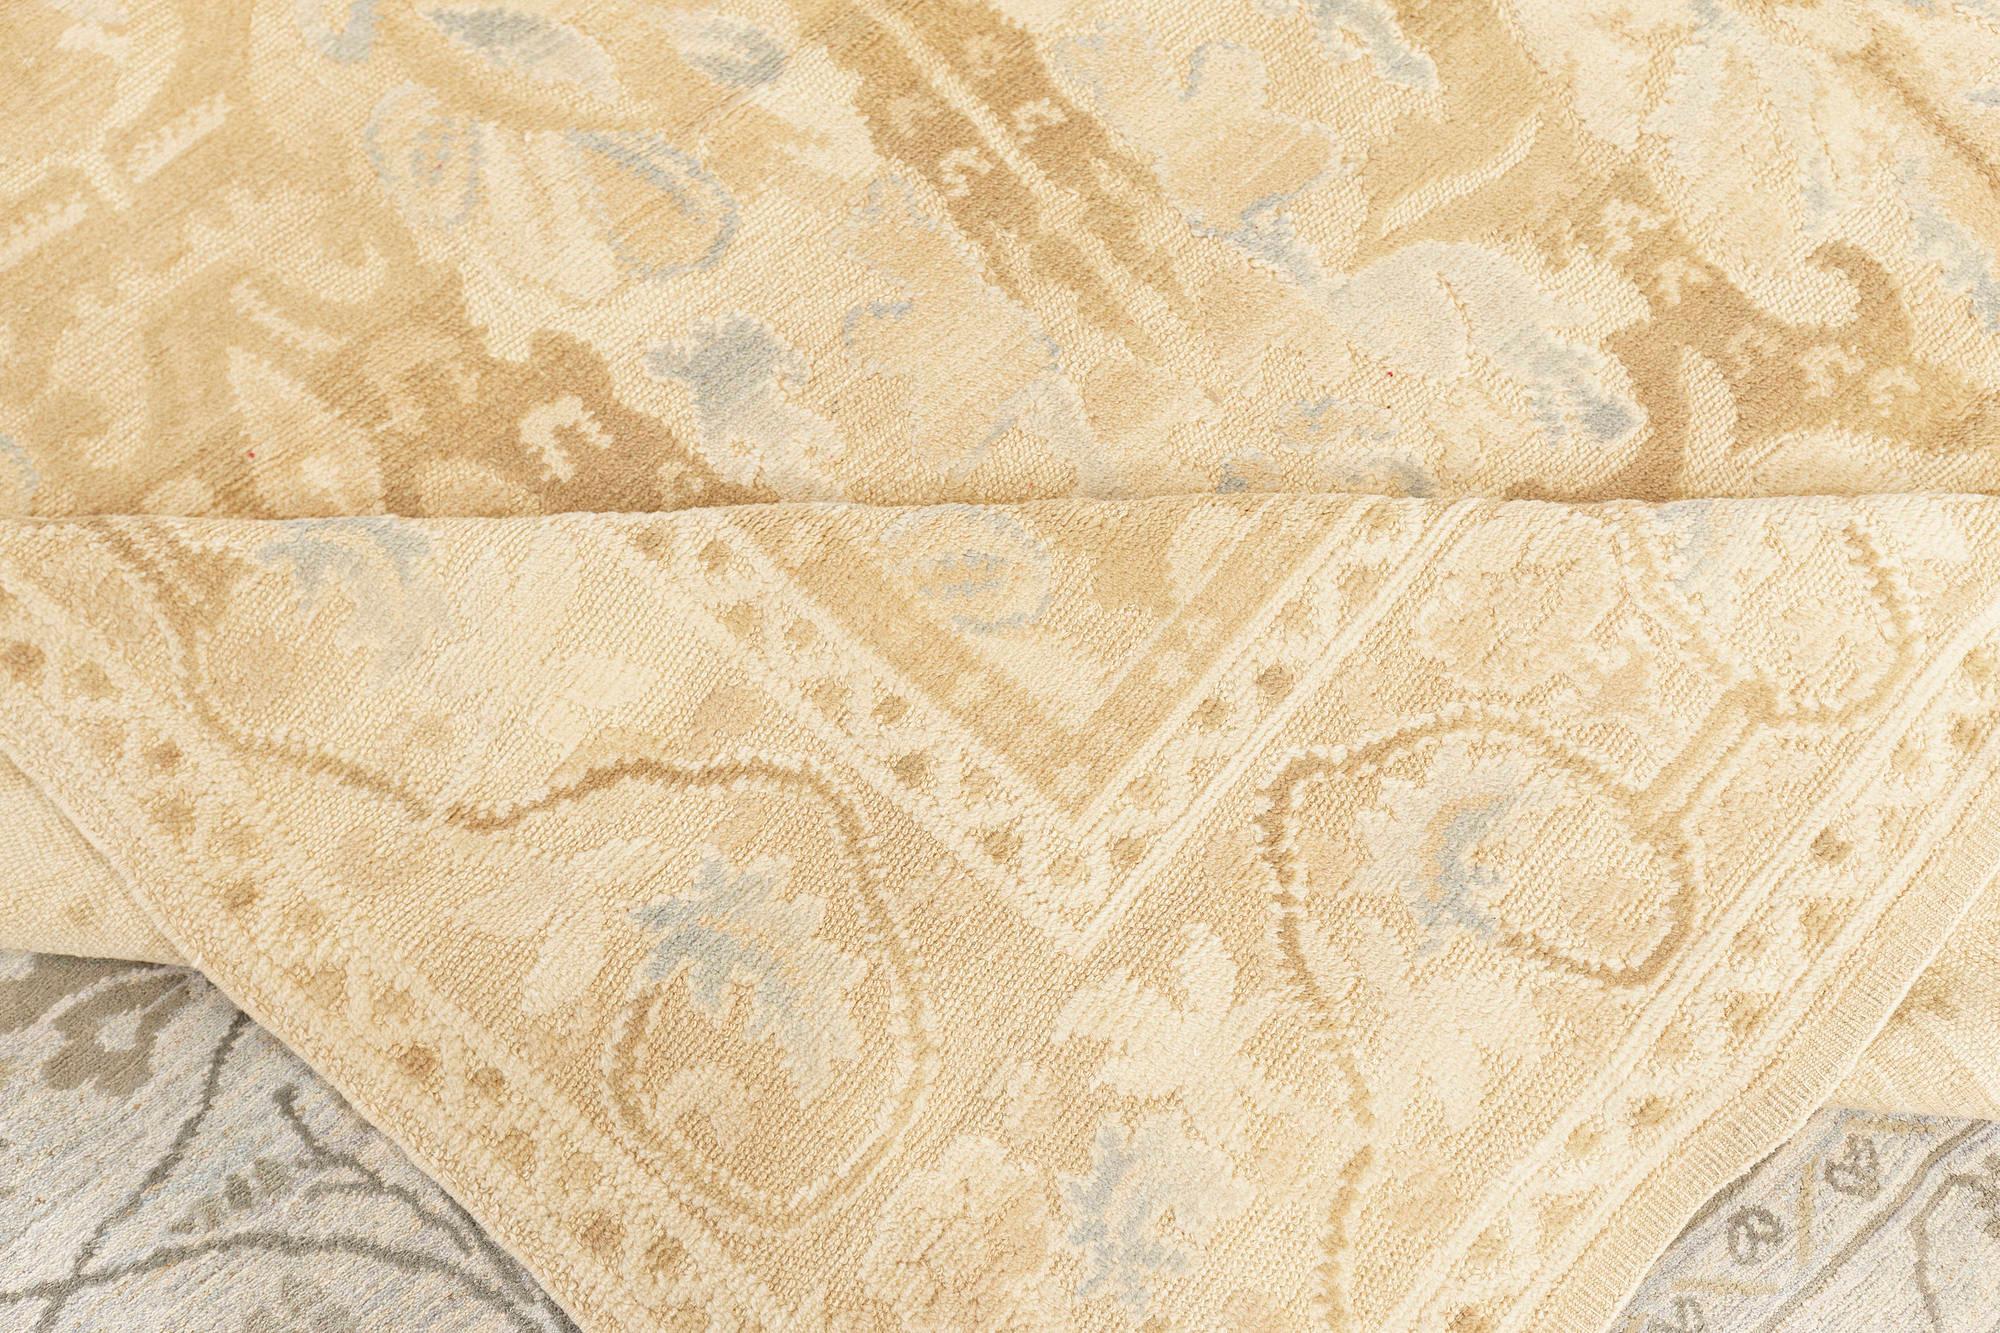 Alhambra design beige and blue handmade wool rug by Doris Leslie Blau.
Size: 10'3